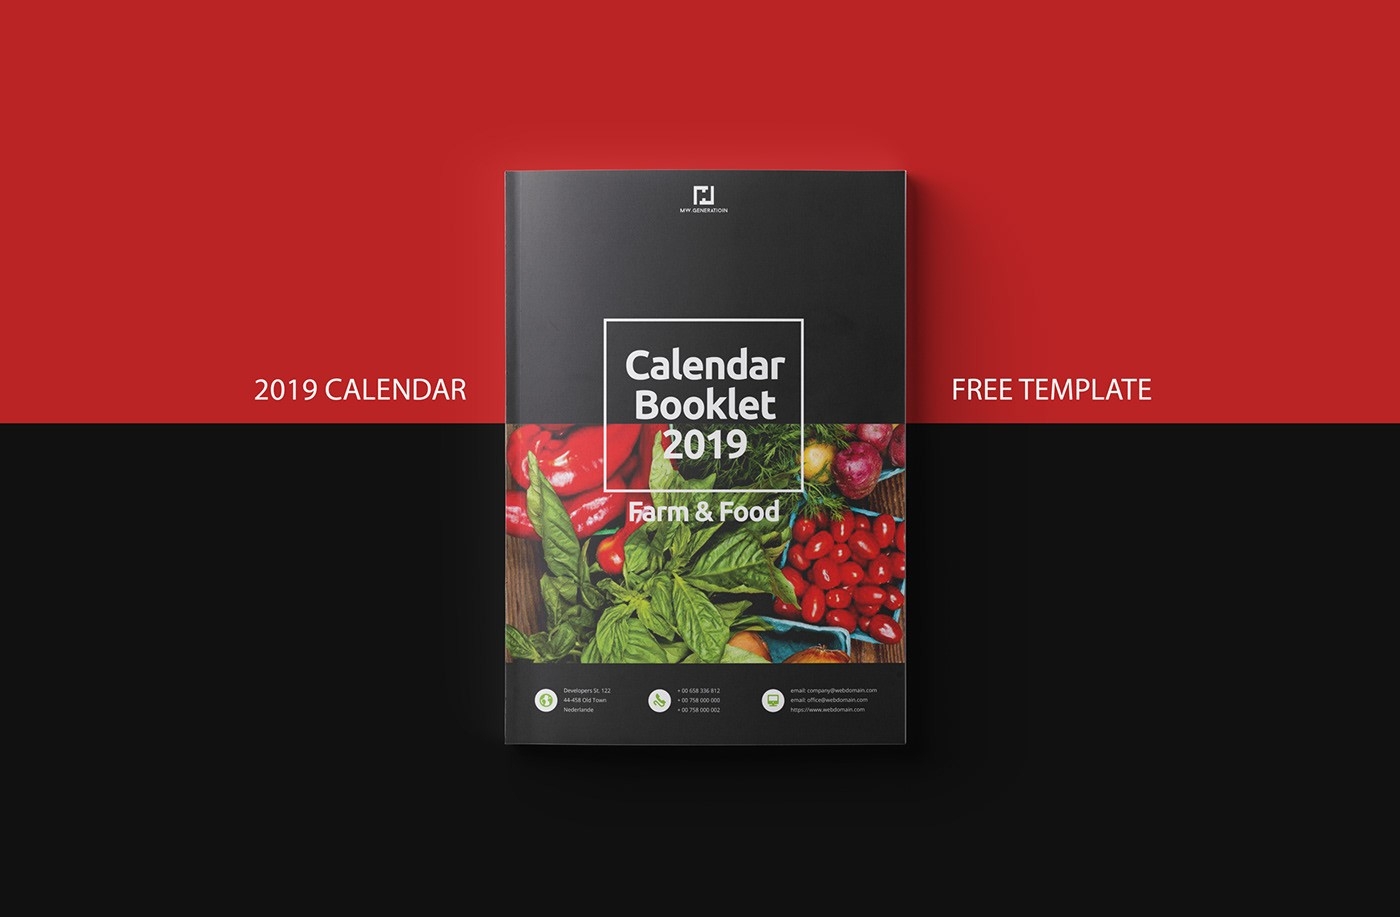 Free Calendar 2019 Indesign Template On Behance-Calendar Template Indesign Free